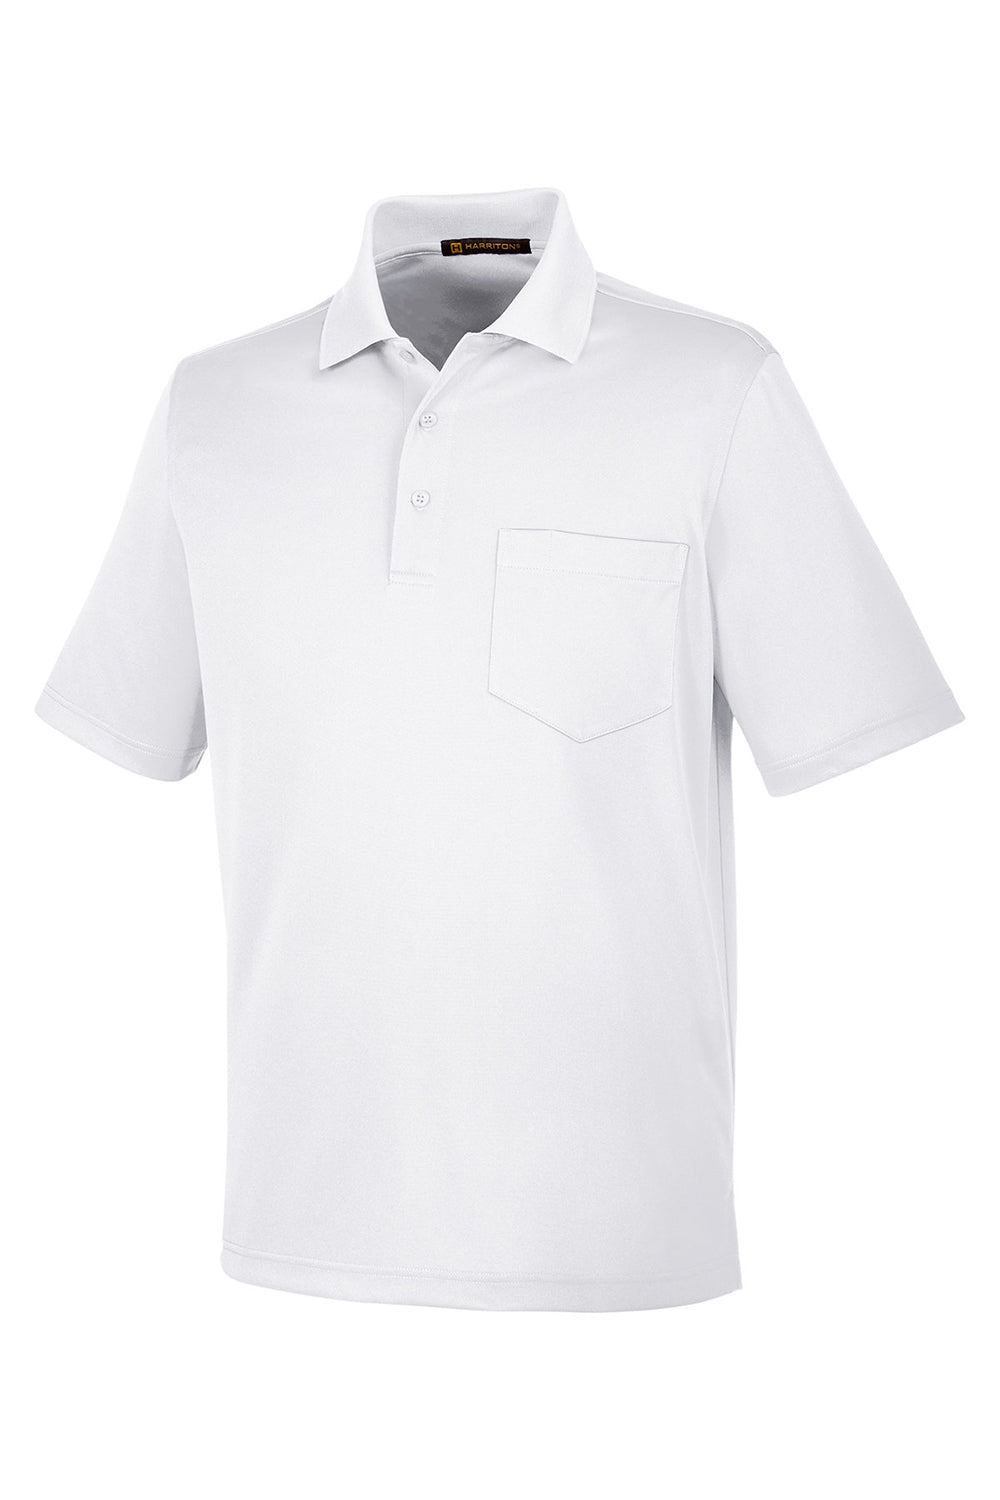 Harriton M348P Mens Advantage Performance Moisture Wicking Short Sleeve Polo Shirt w/ Pocket White Flat Front